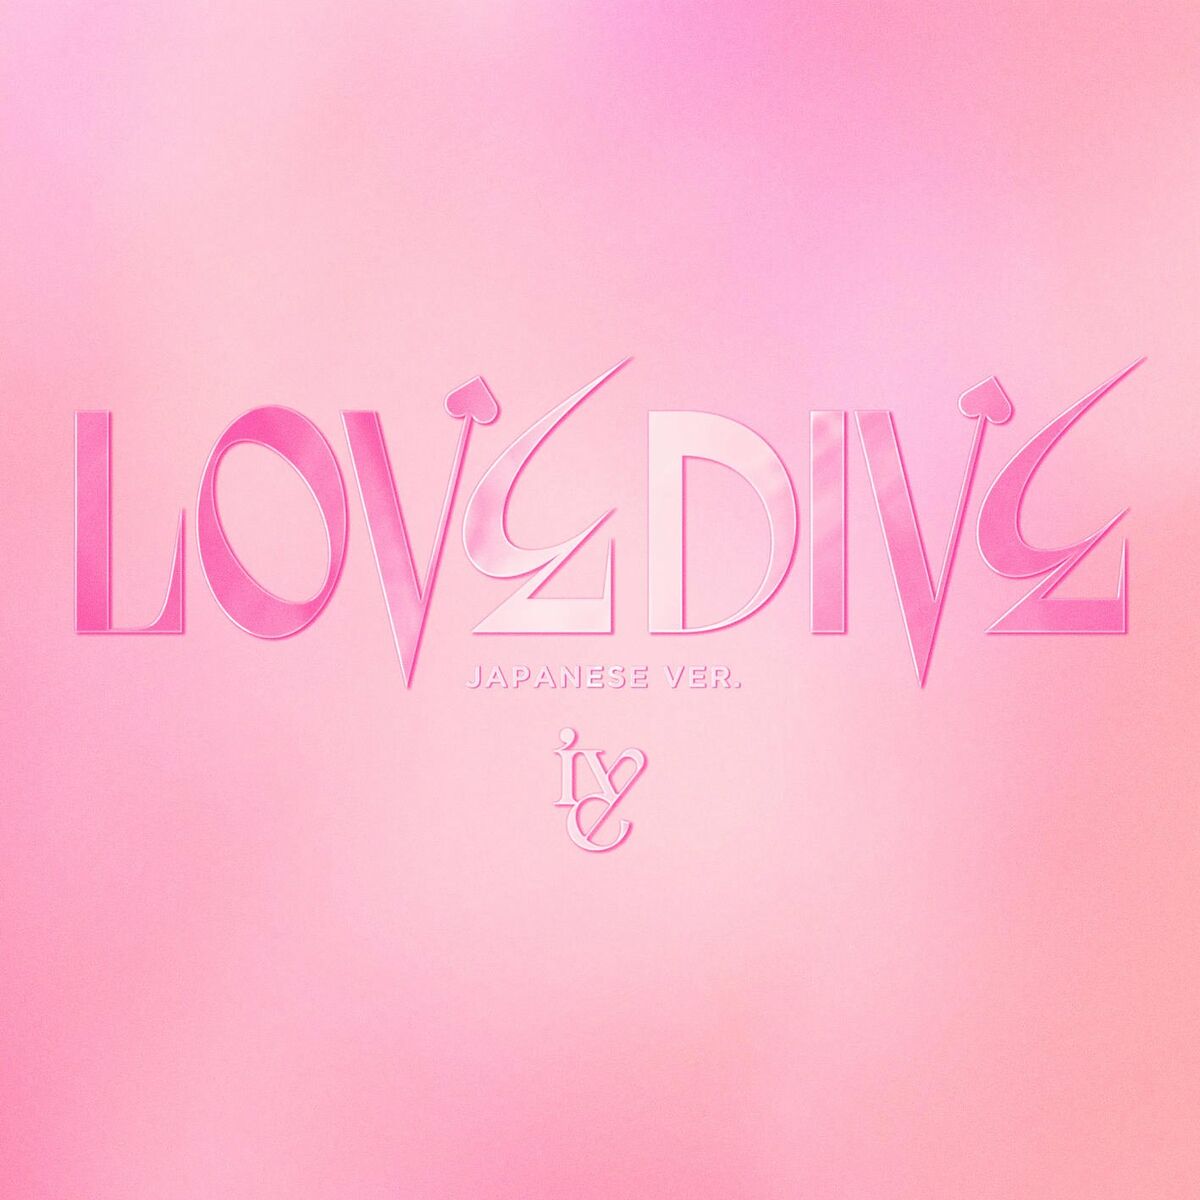 IVE – LOVE DIVE -Japanese version- – Single